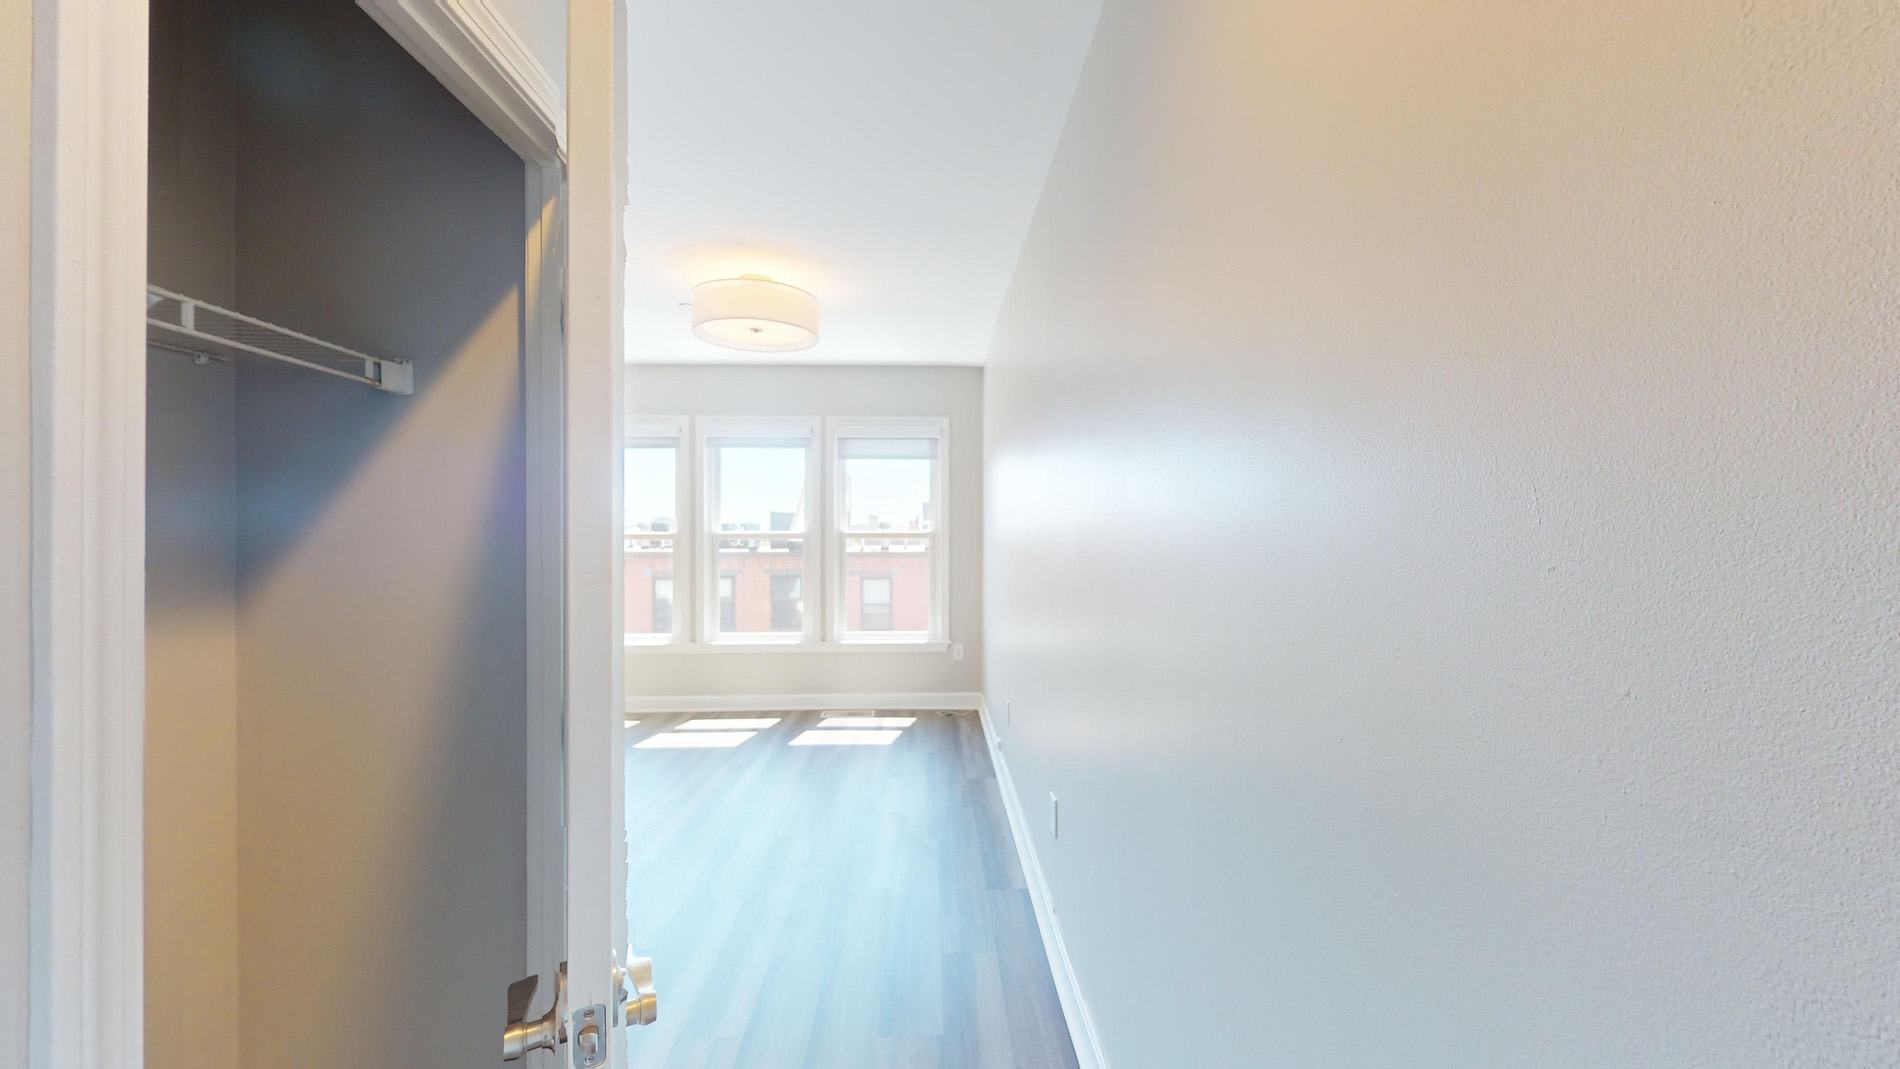 Photos of apartment on Tremont St.,Boston MA 02116